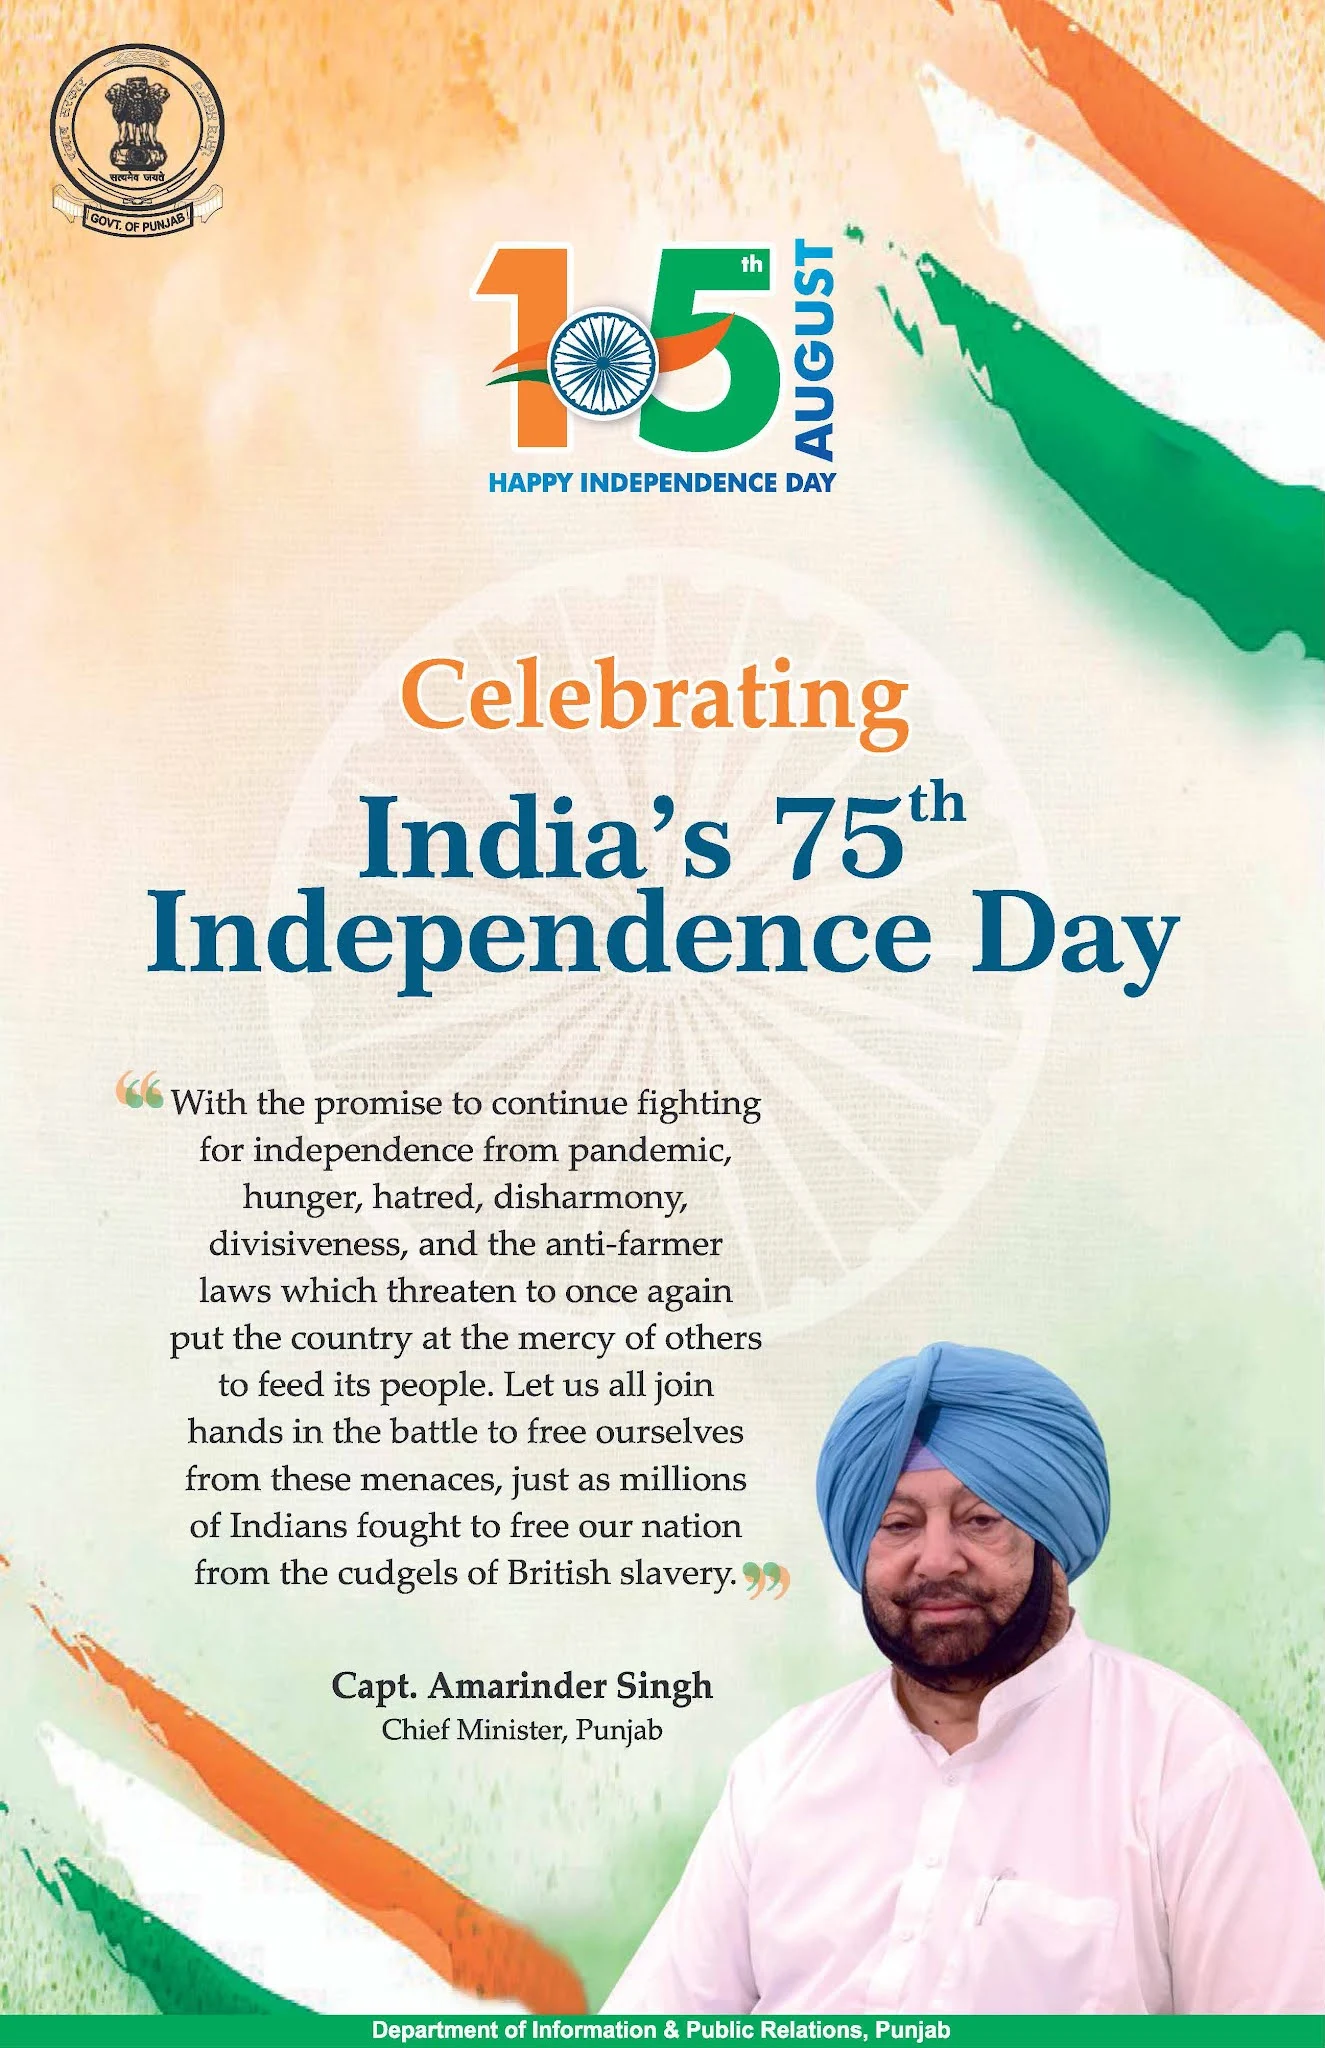 #11 Punjab Govt. Celebrating India's 75th Independence Day